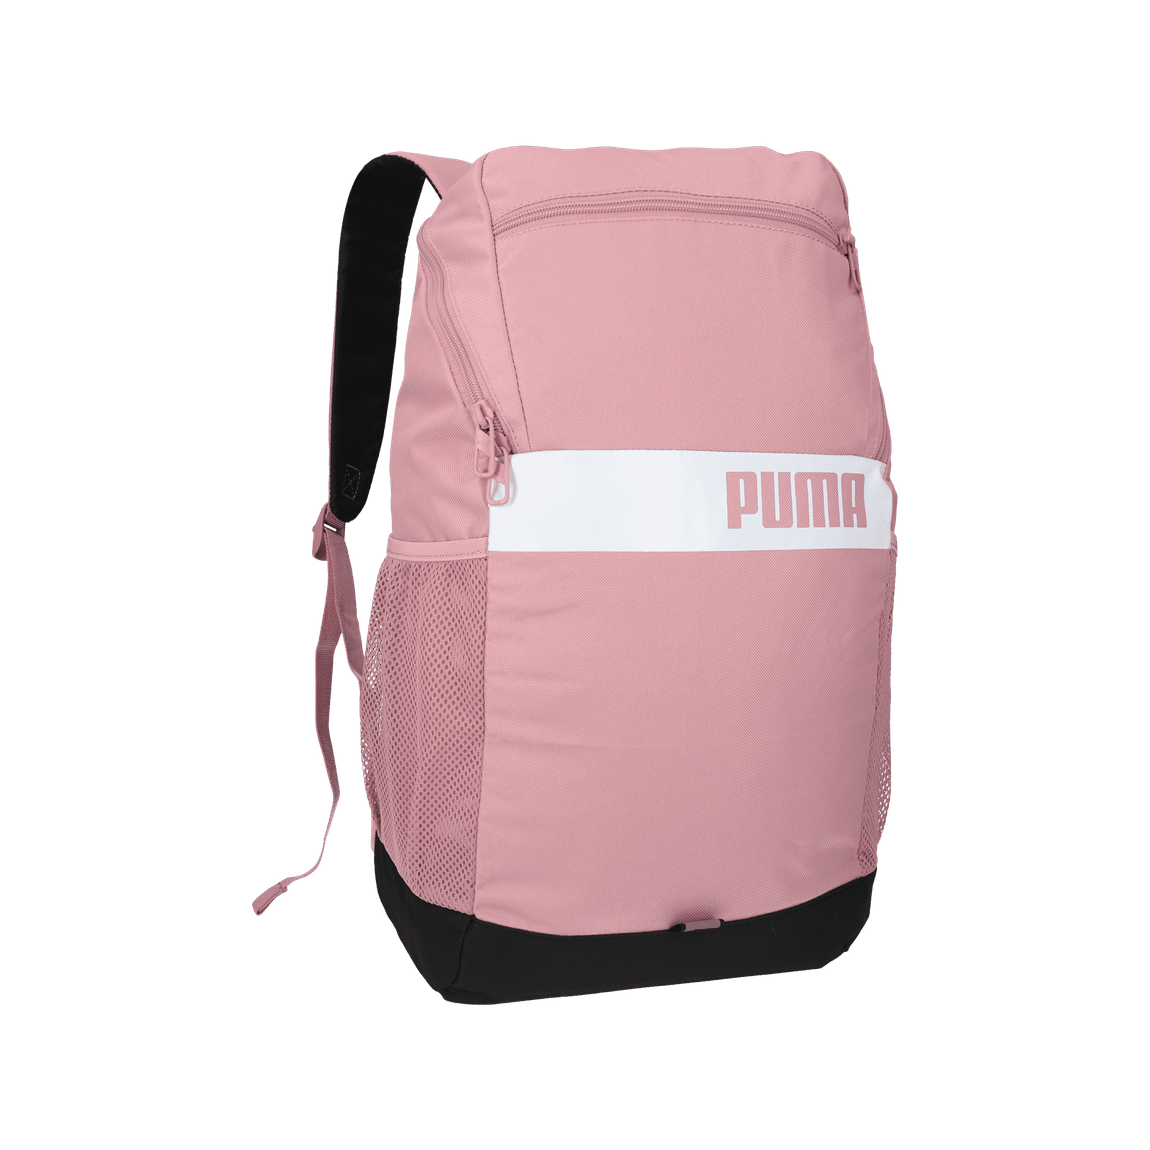 mochila puma rosa mujer